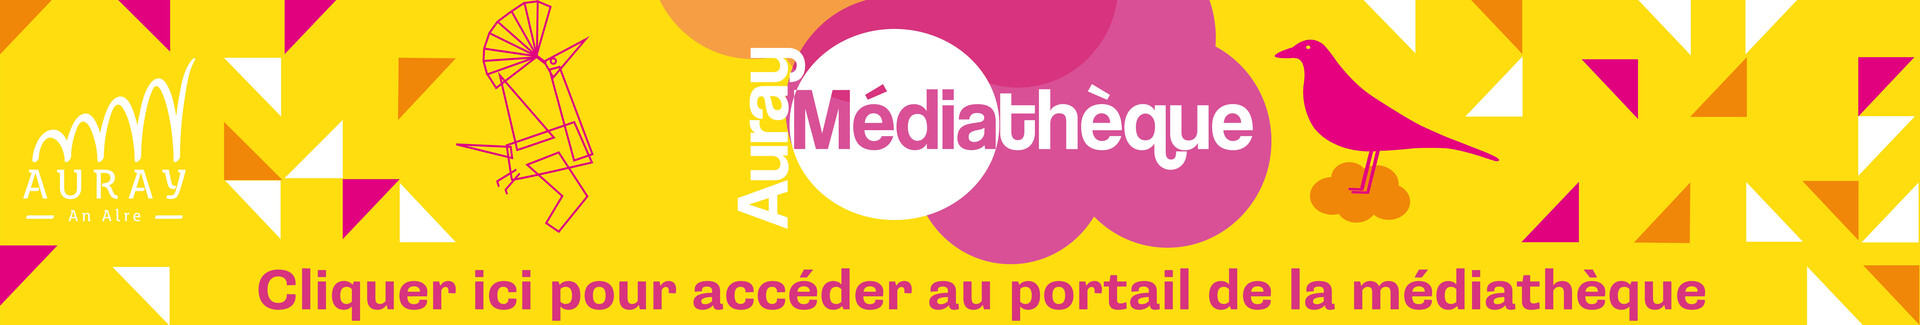 Médiathèque d'Auray